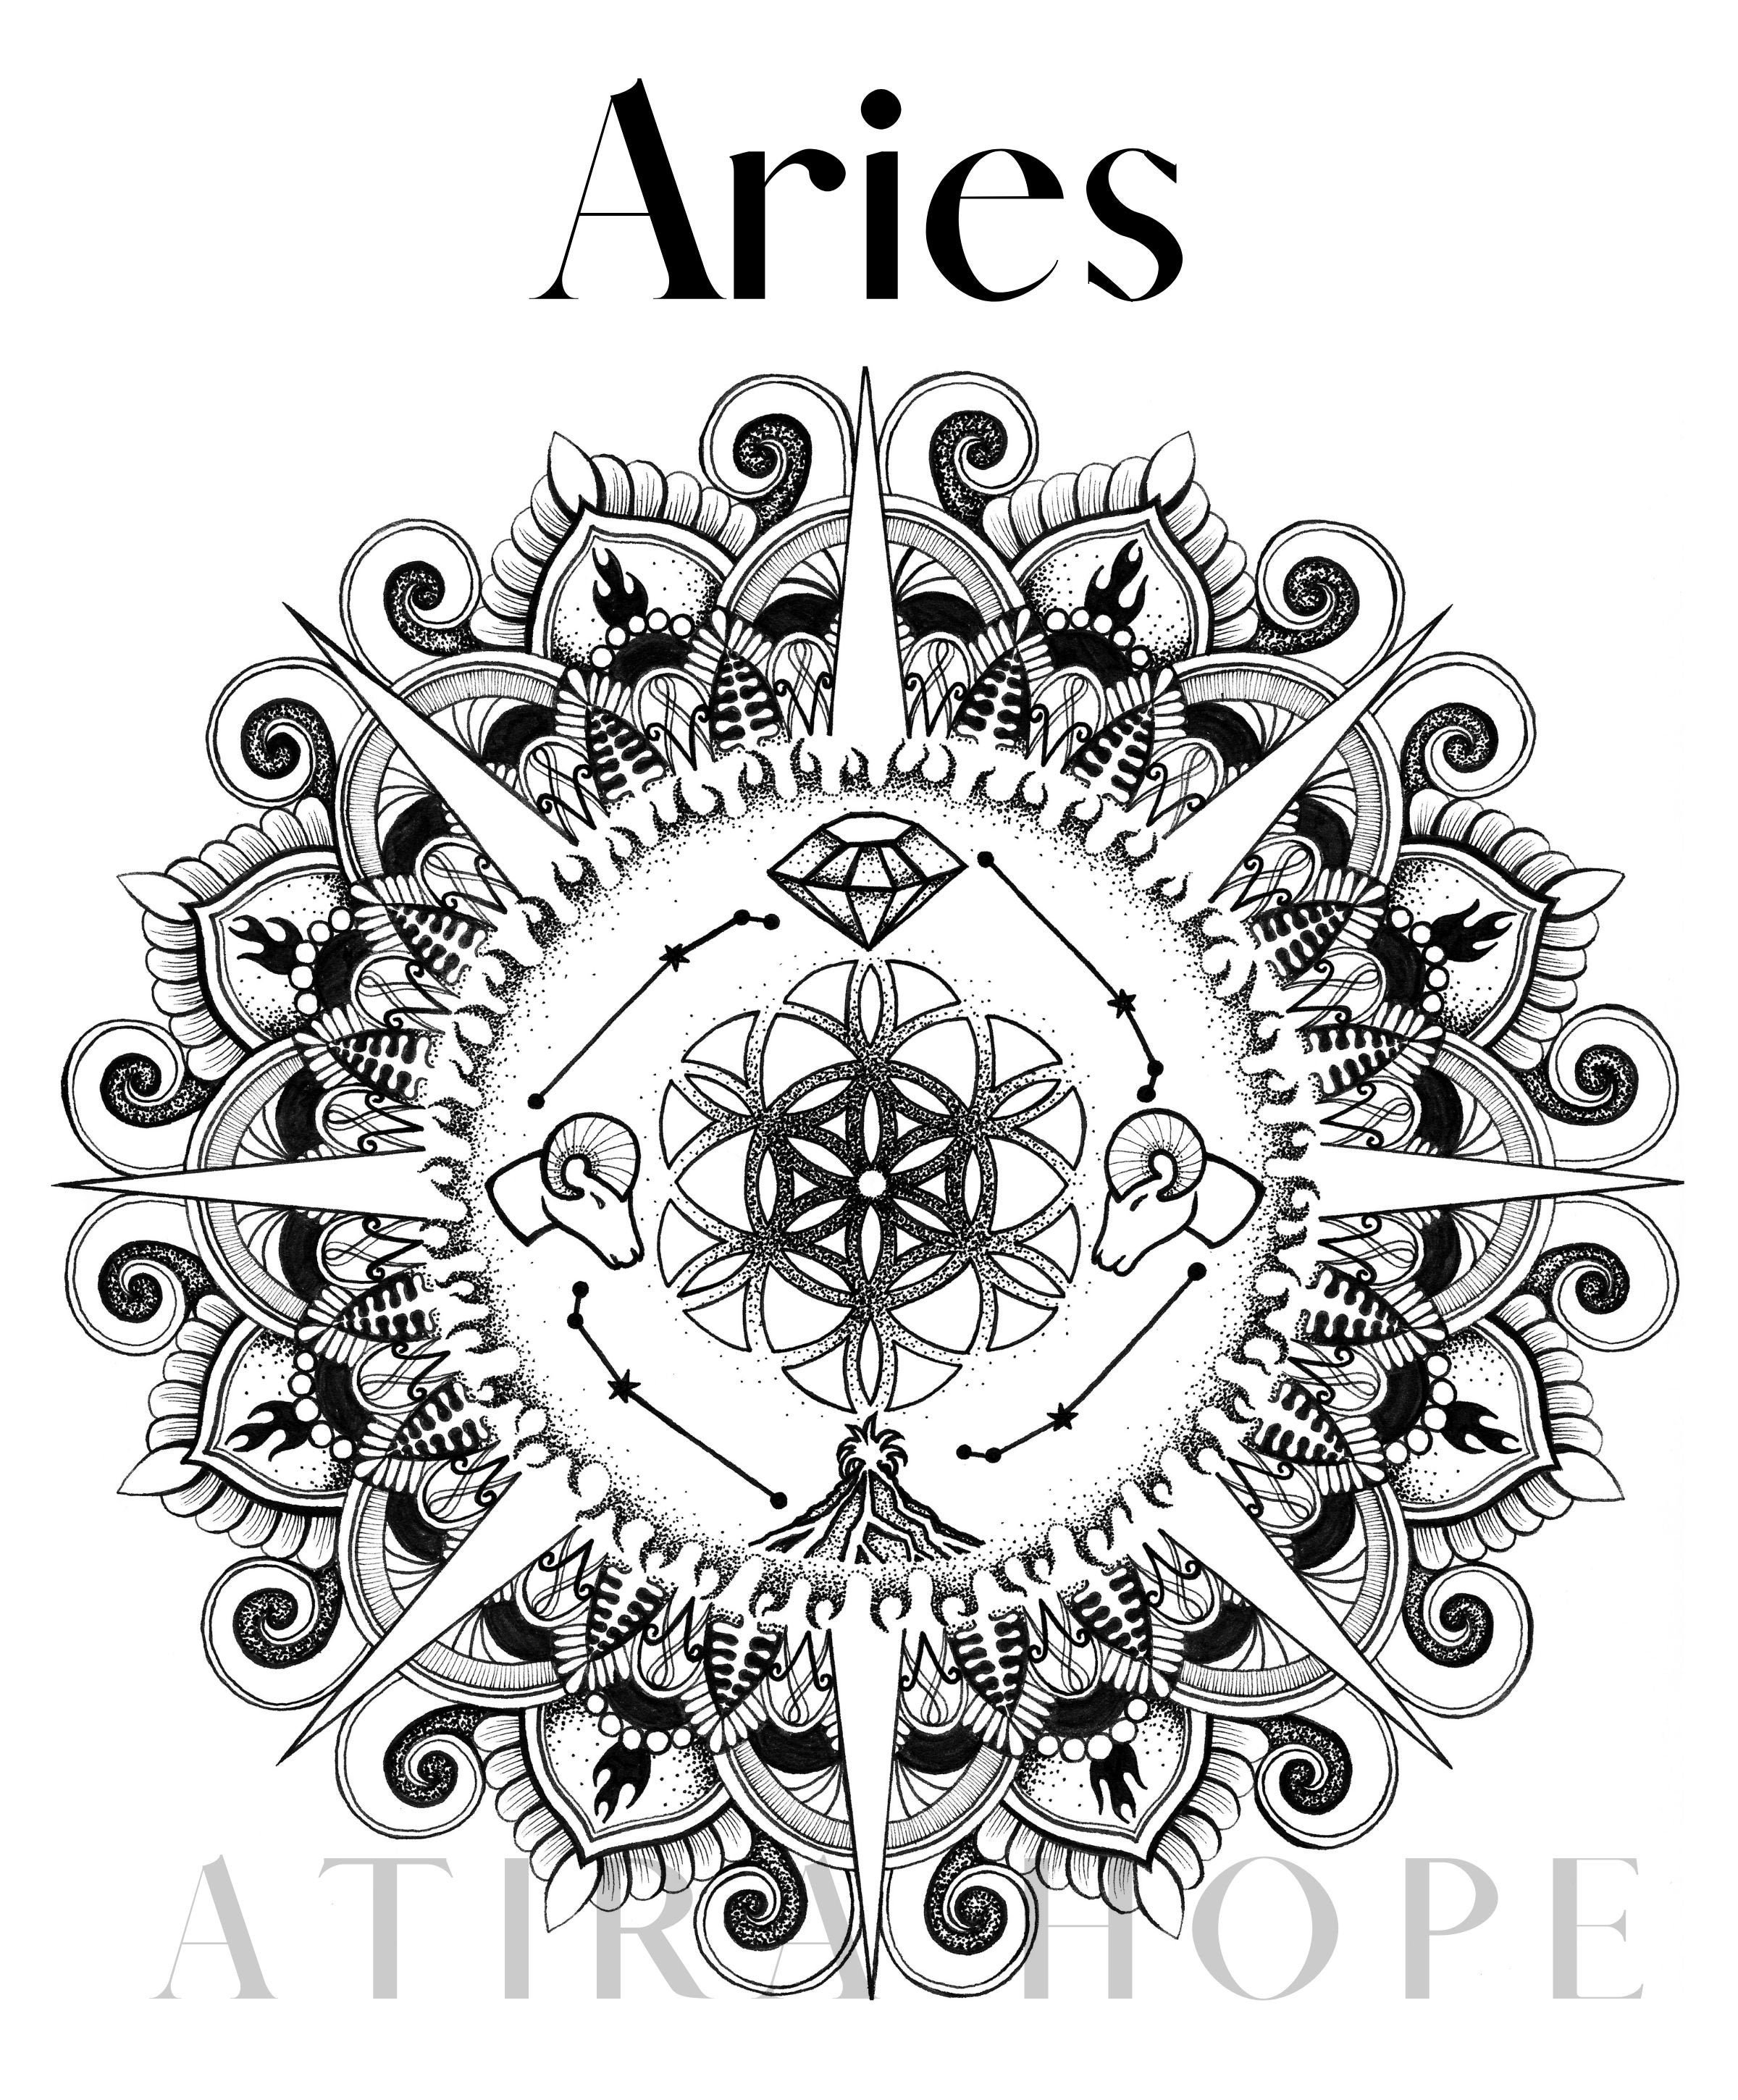 Tattoo uploaded by Kye • Aries zodiacac sign tattoo • Tattoodo